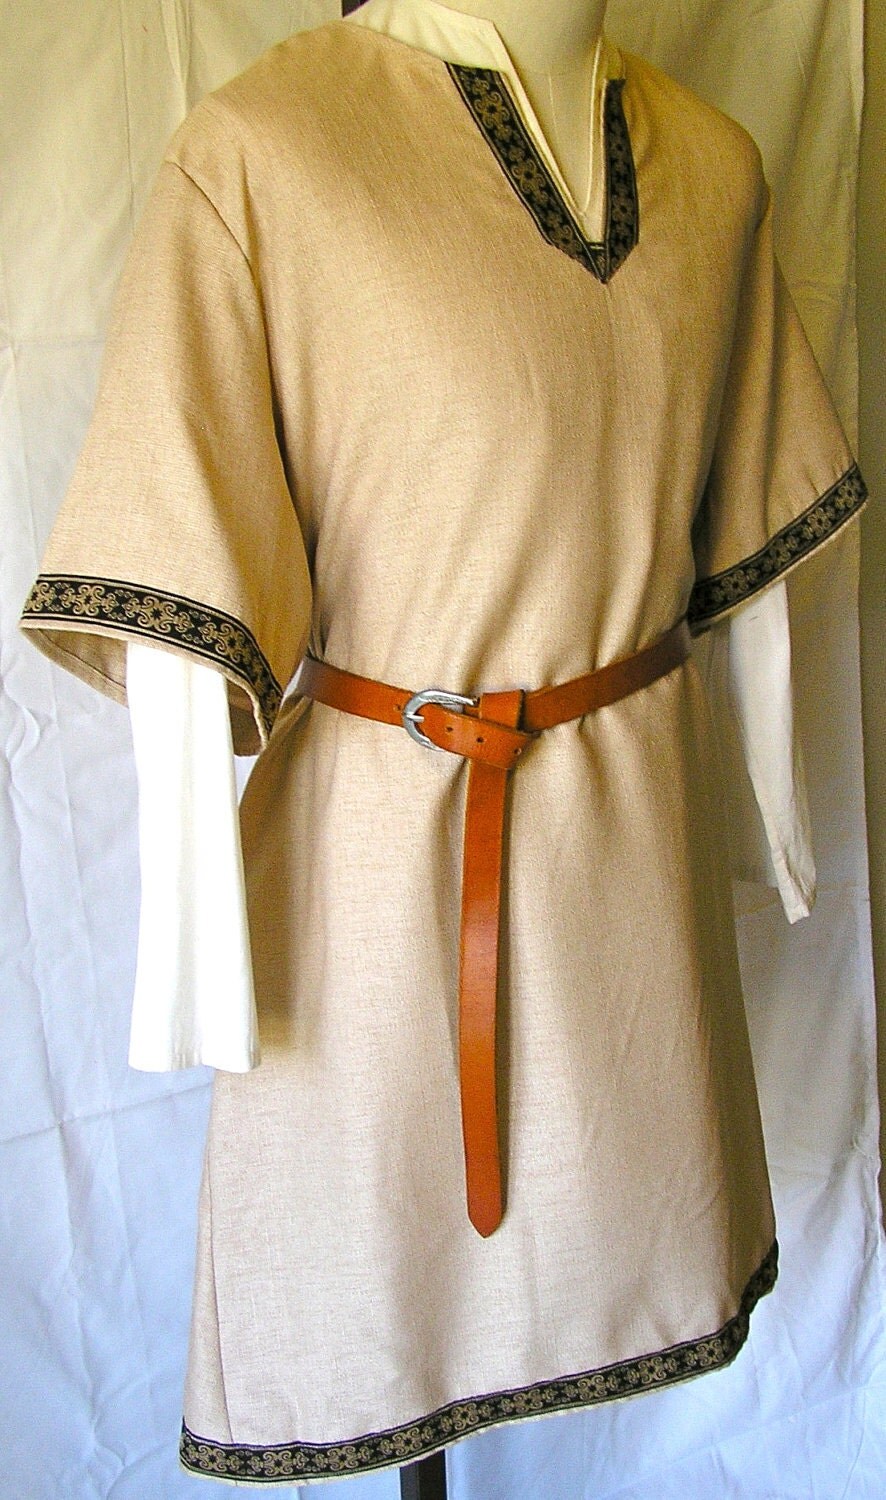 Viking Medieval SCA historical short sleeve linen Tunic